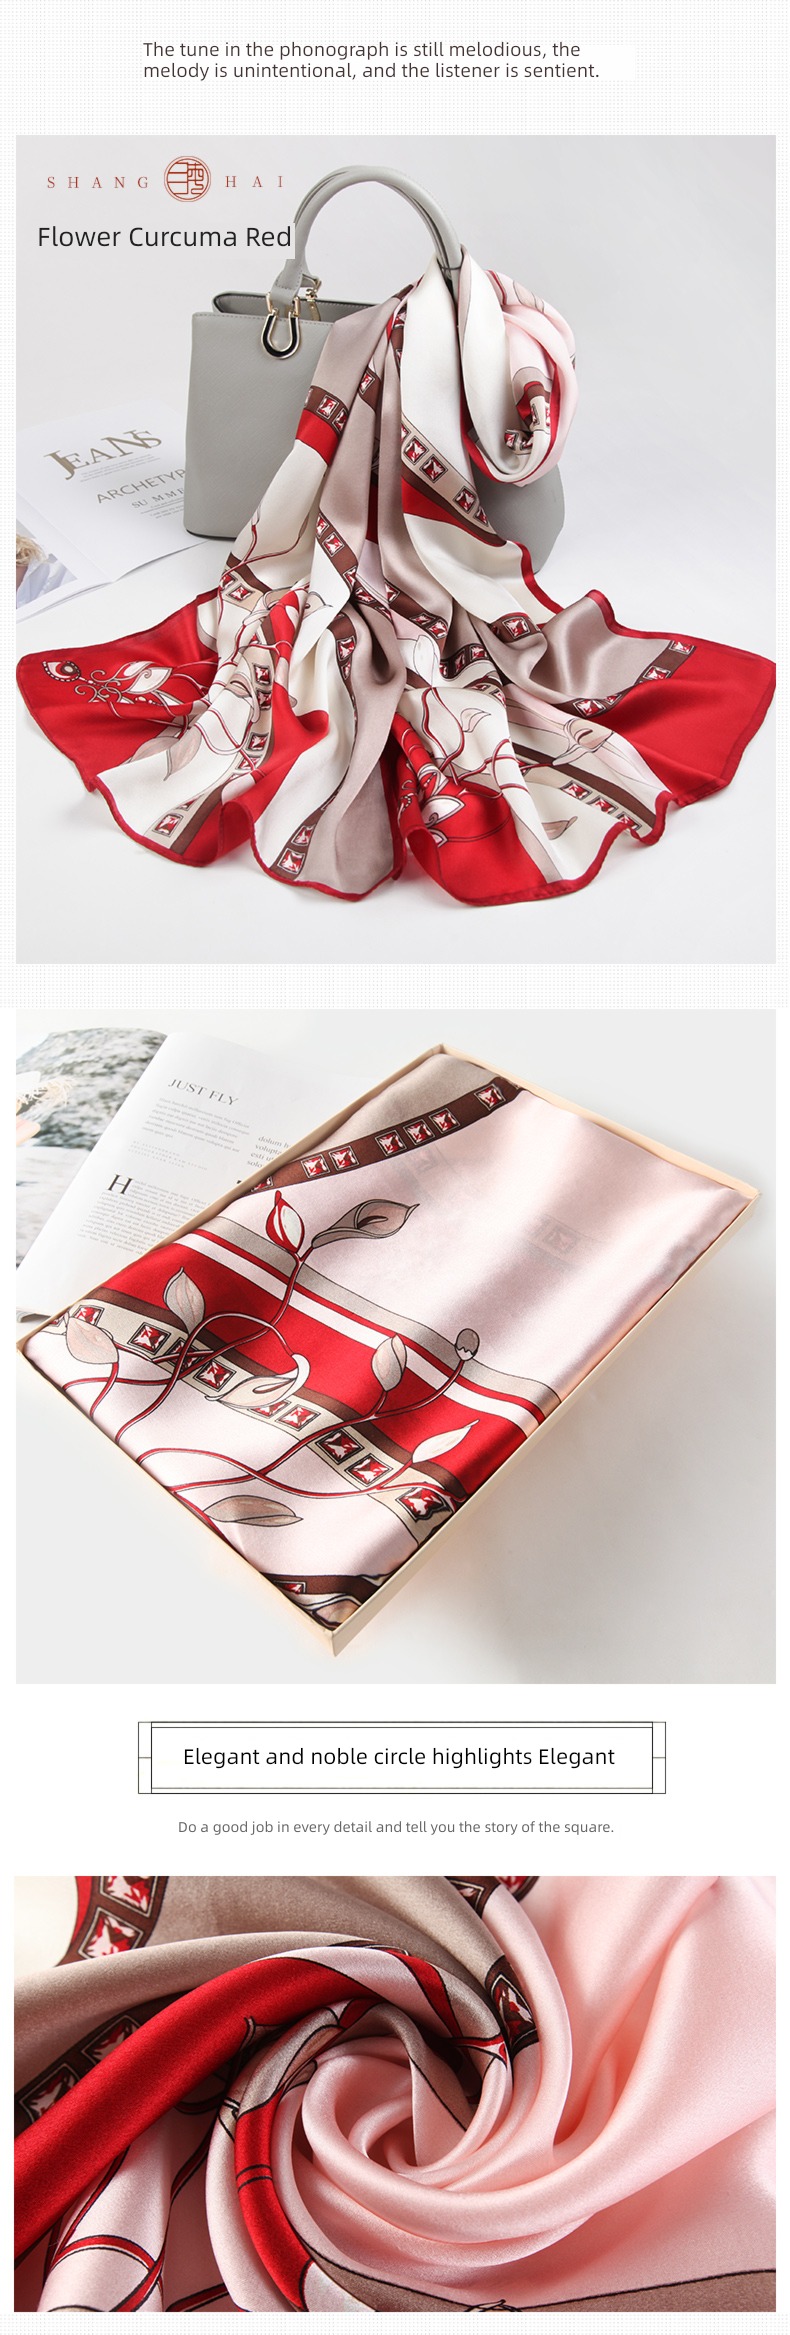 Shanghai Story female Gift box To Mom high-grade Silk scarf